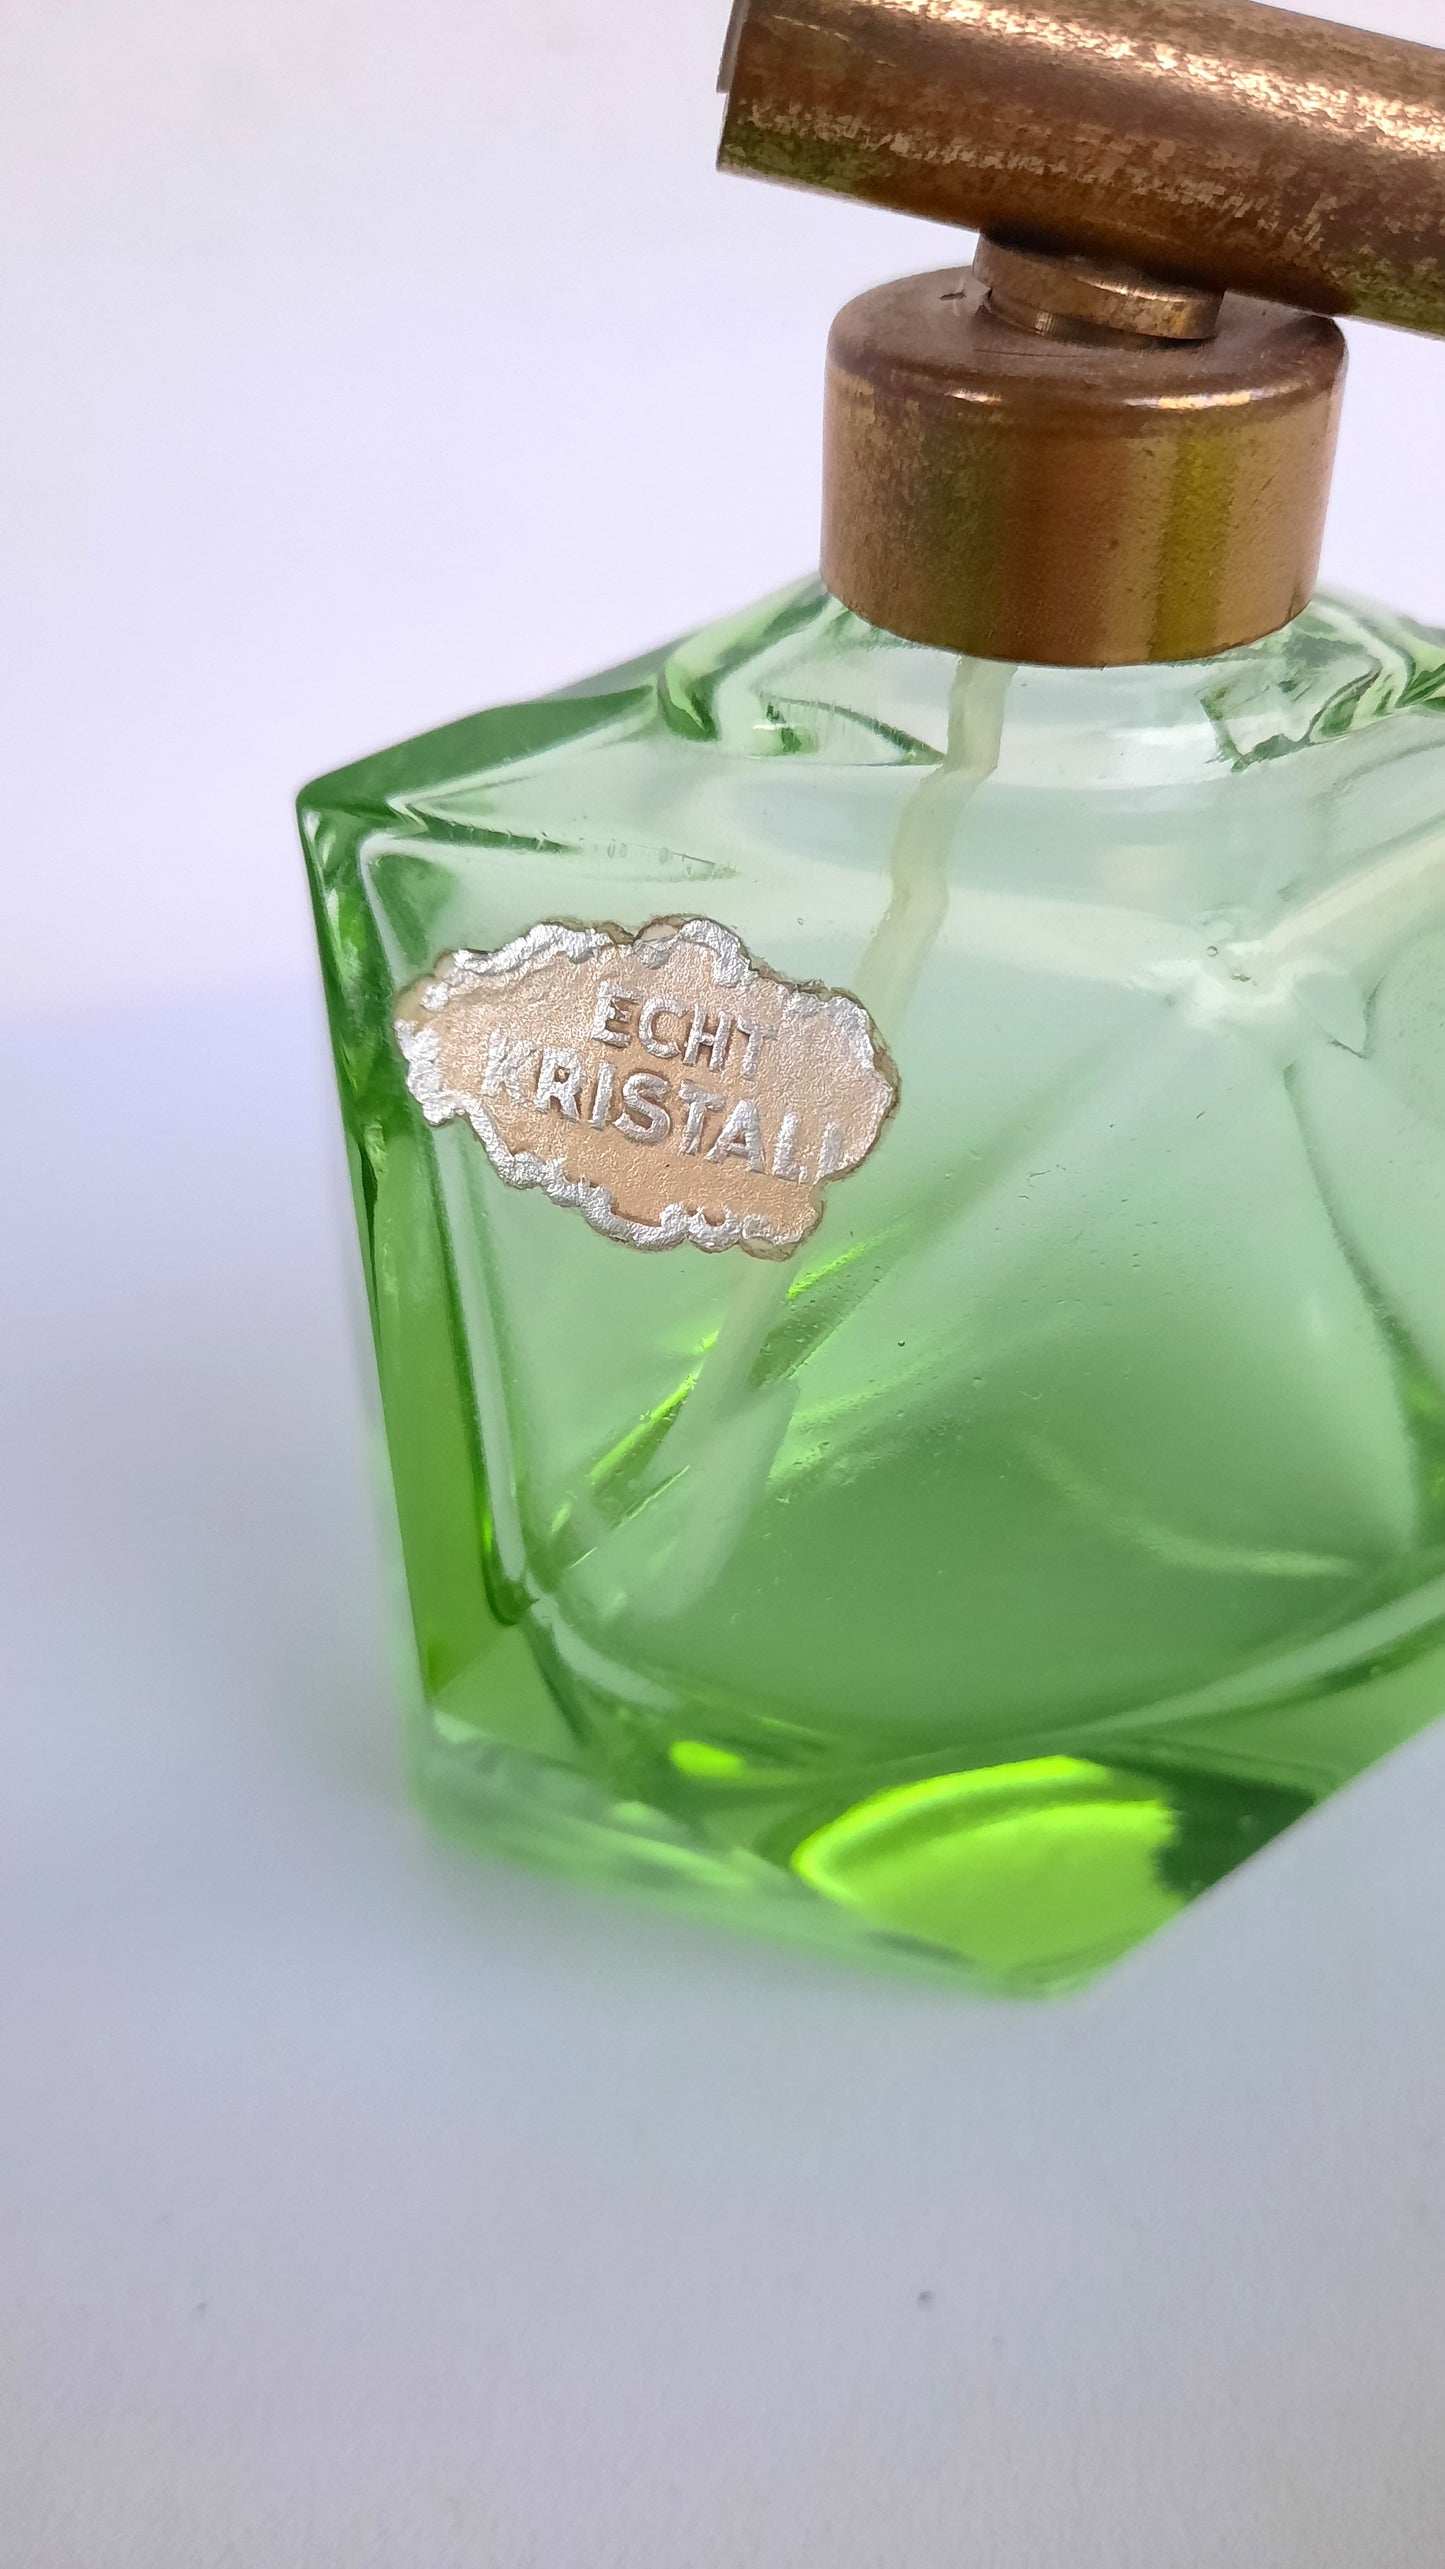 1940's Rare Green Crystal Vanity Set "Echt Kristall"